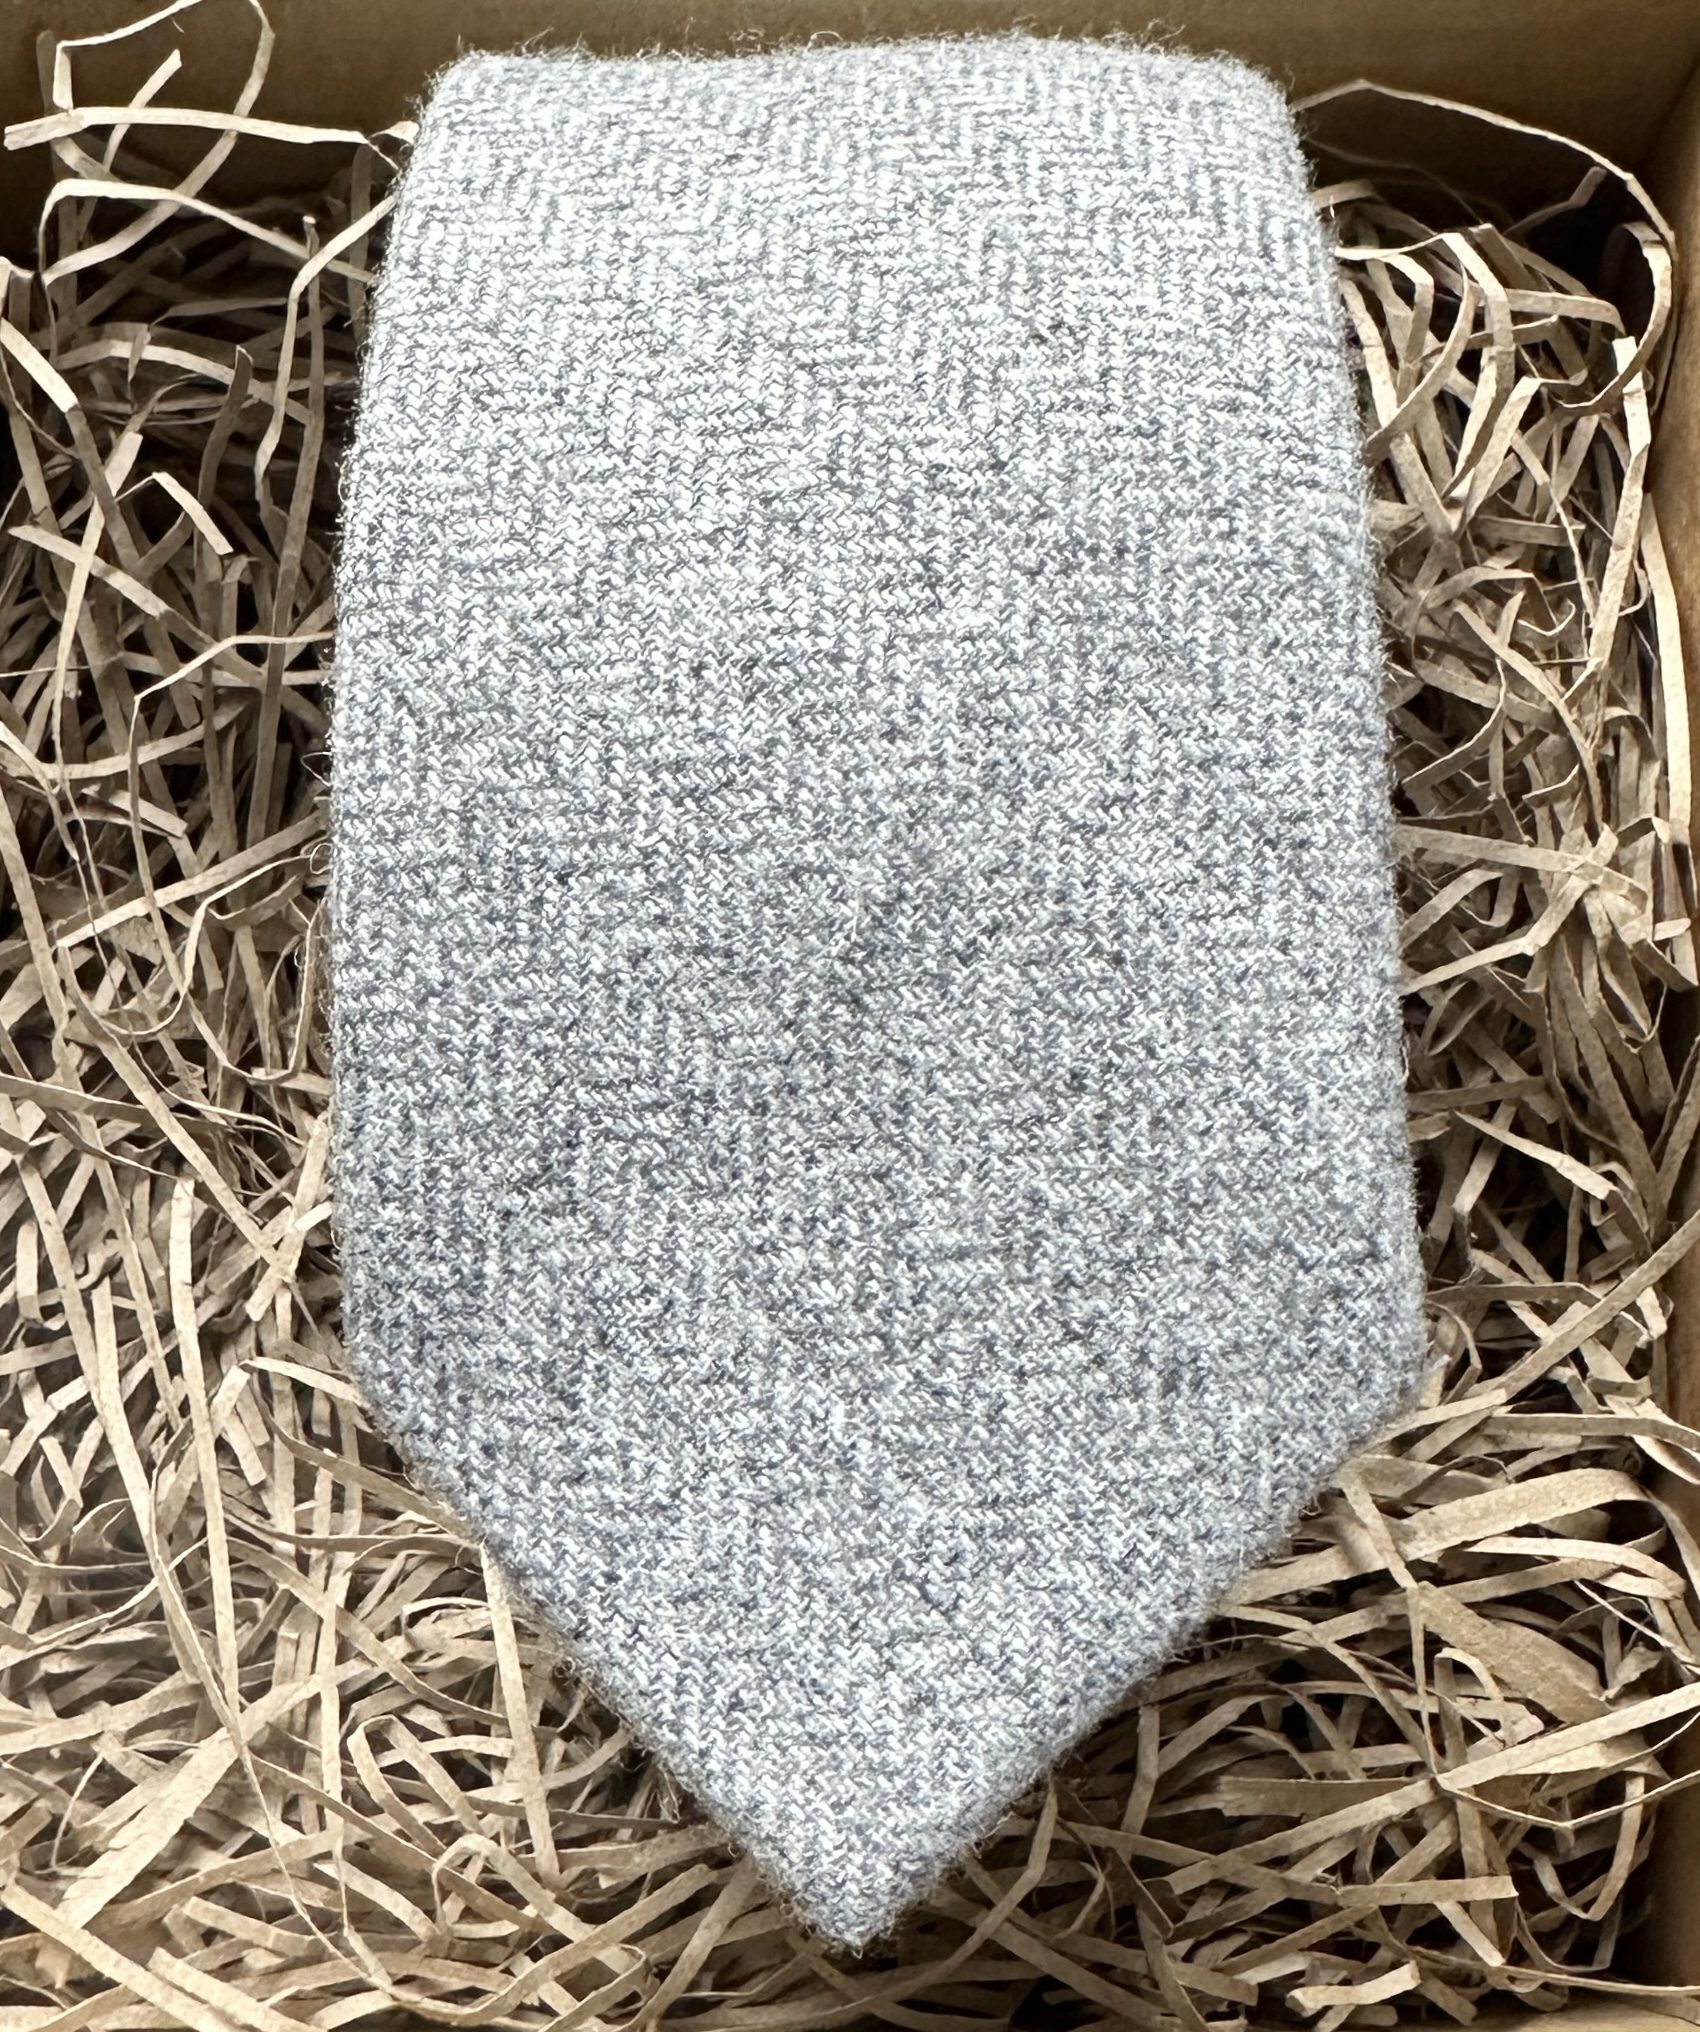 A light grey herringbone tie ideal for grooms and weddings